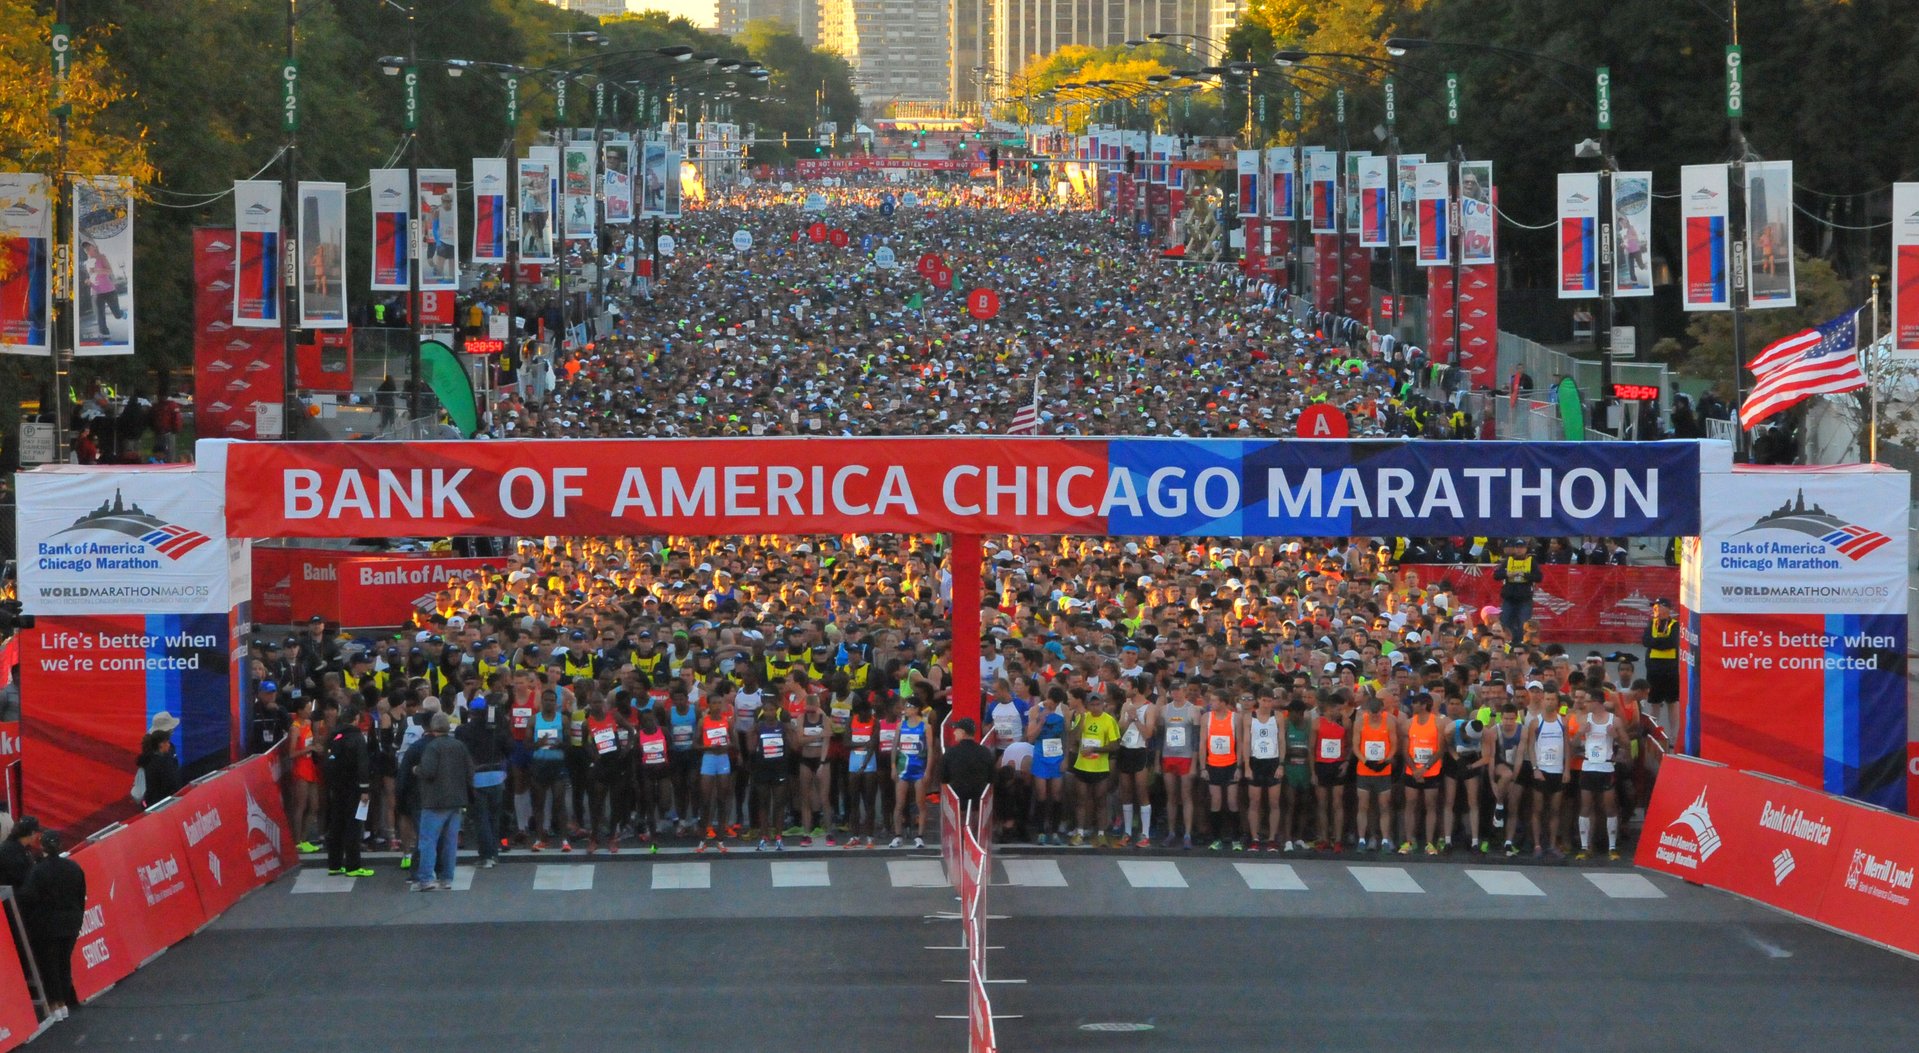 Bank of America Chicago Marathon